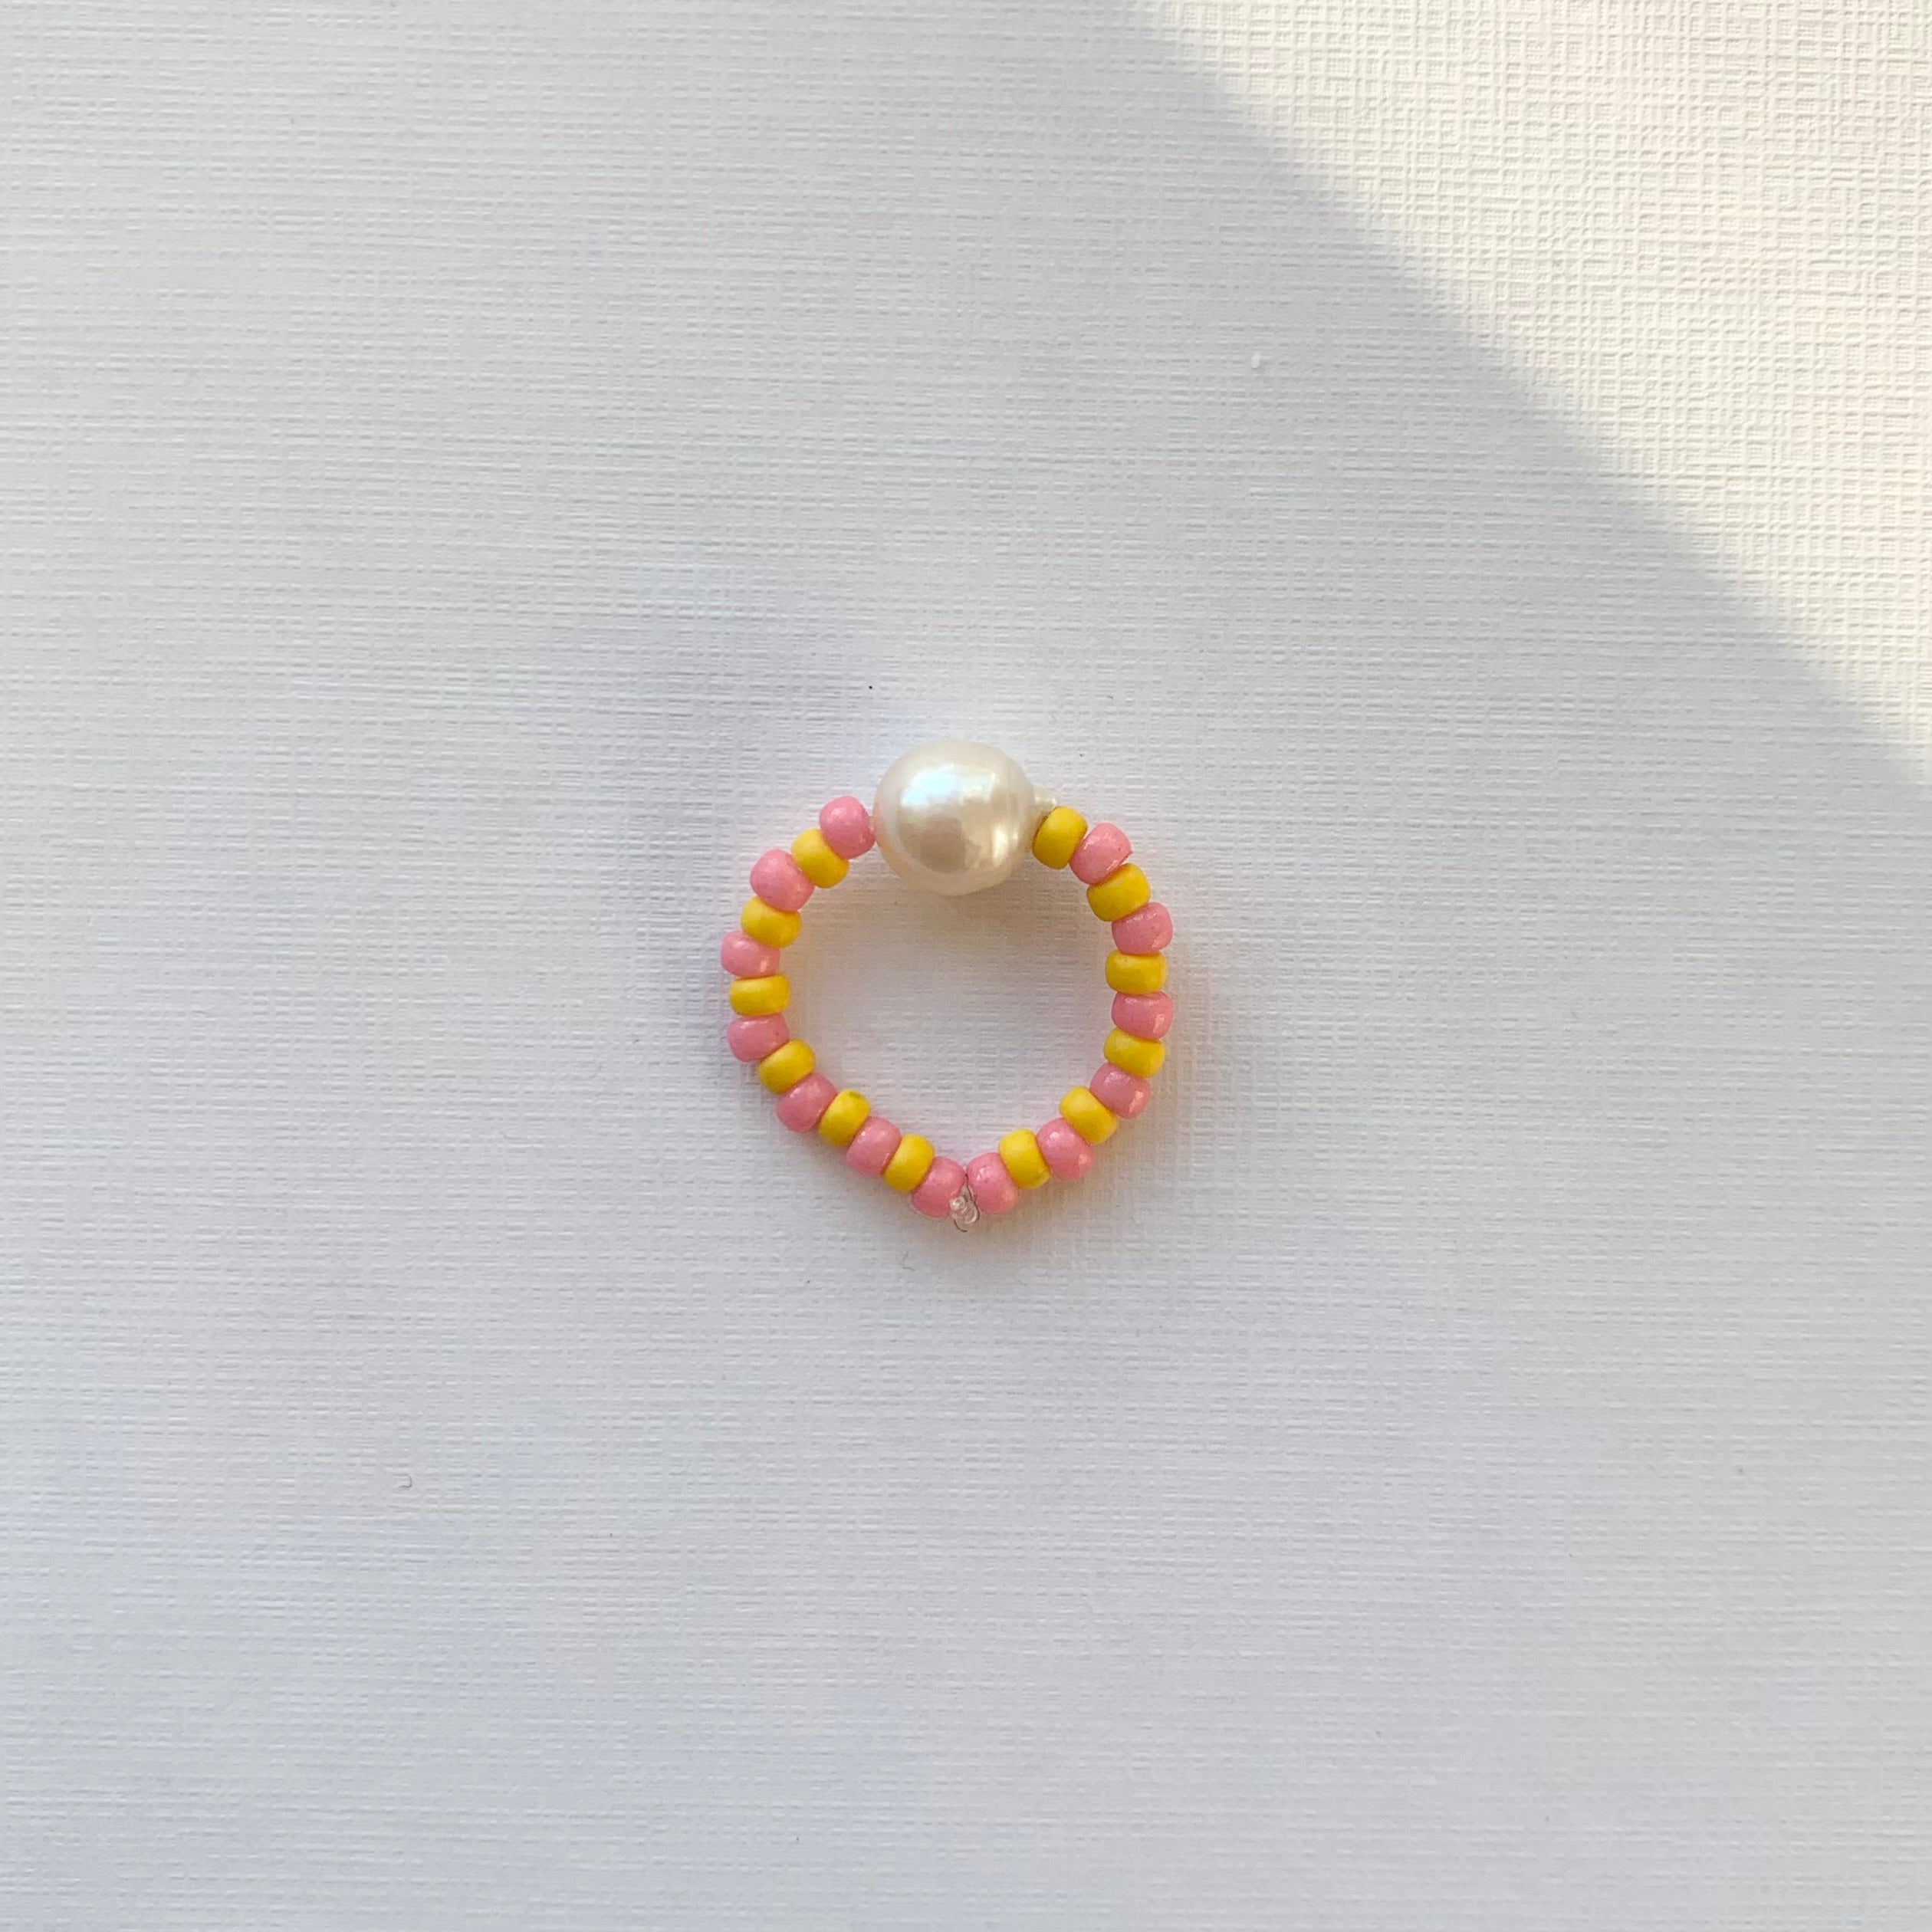 Cheerful Ring - Pink & Yellow